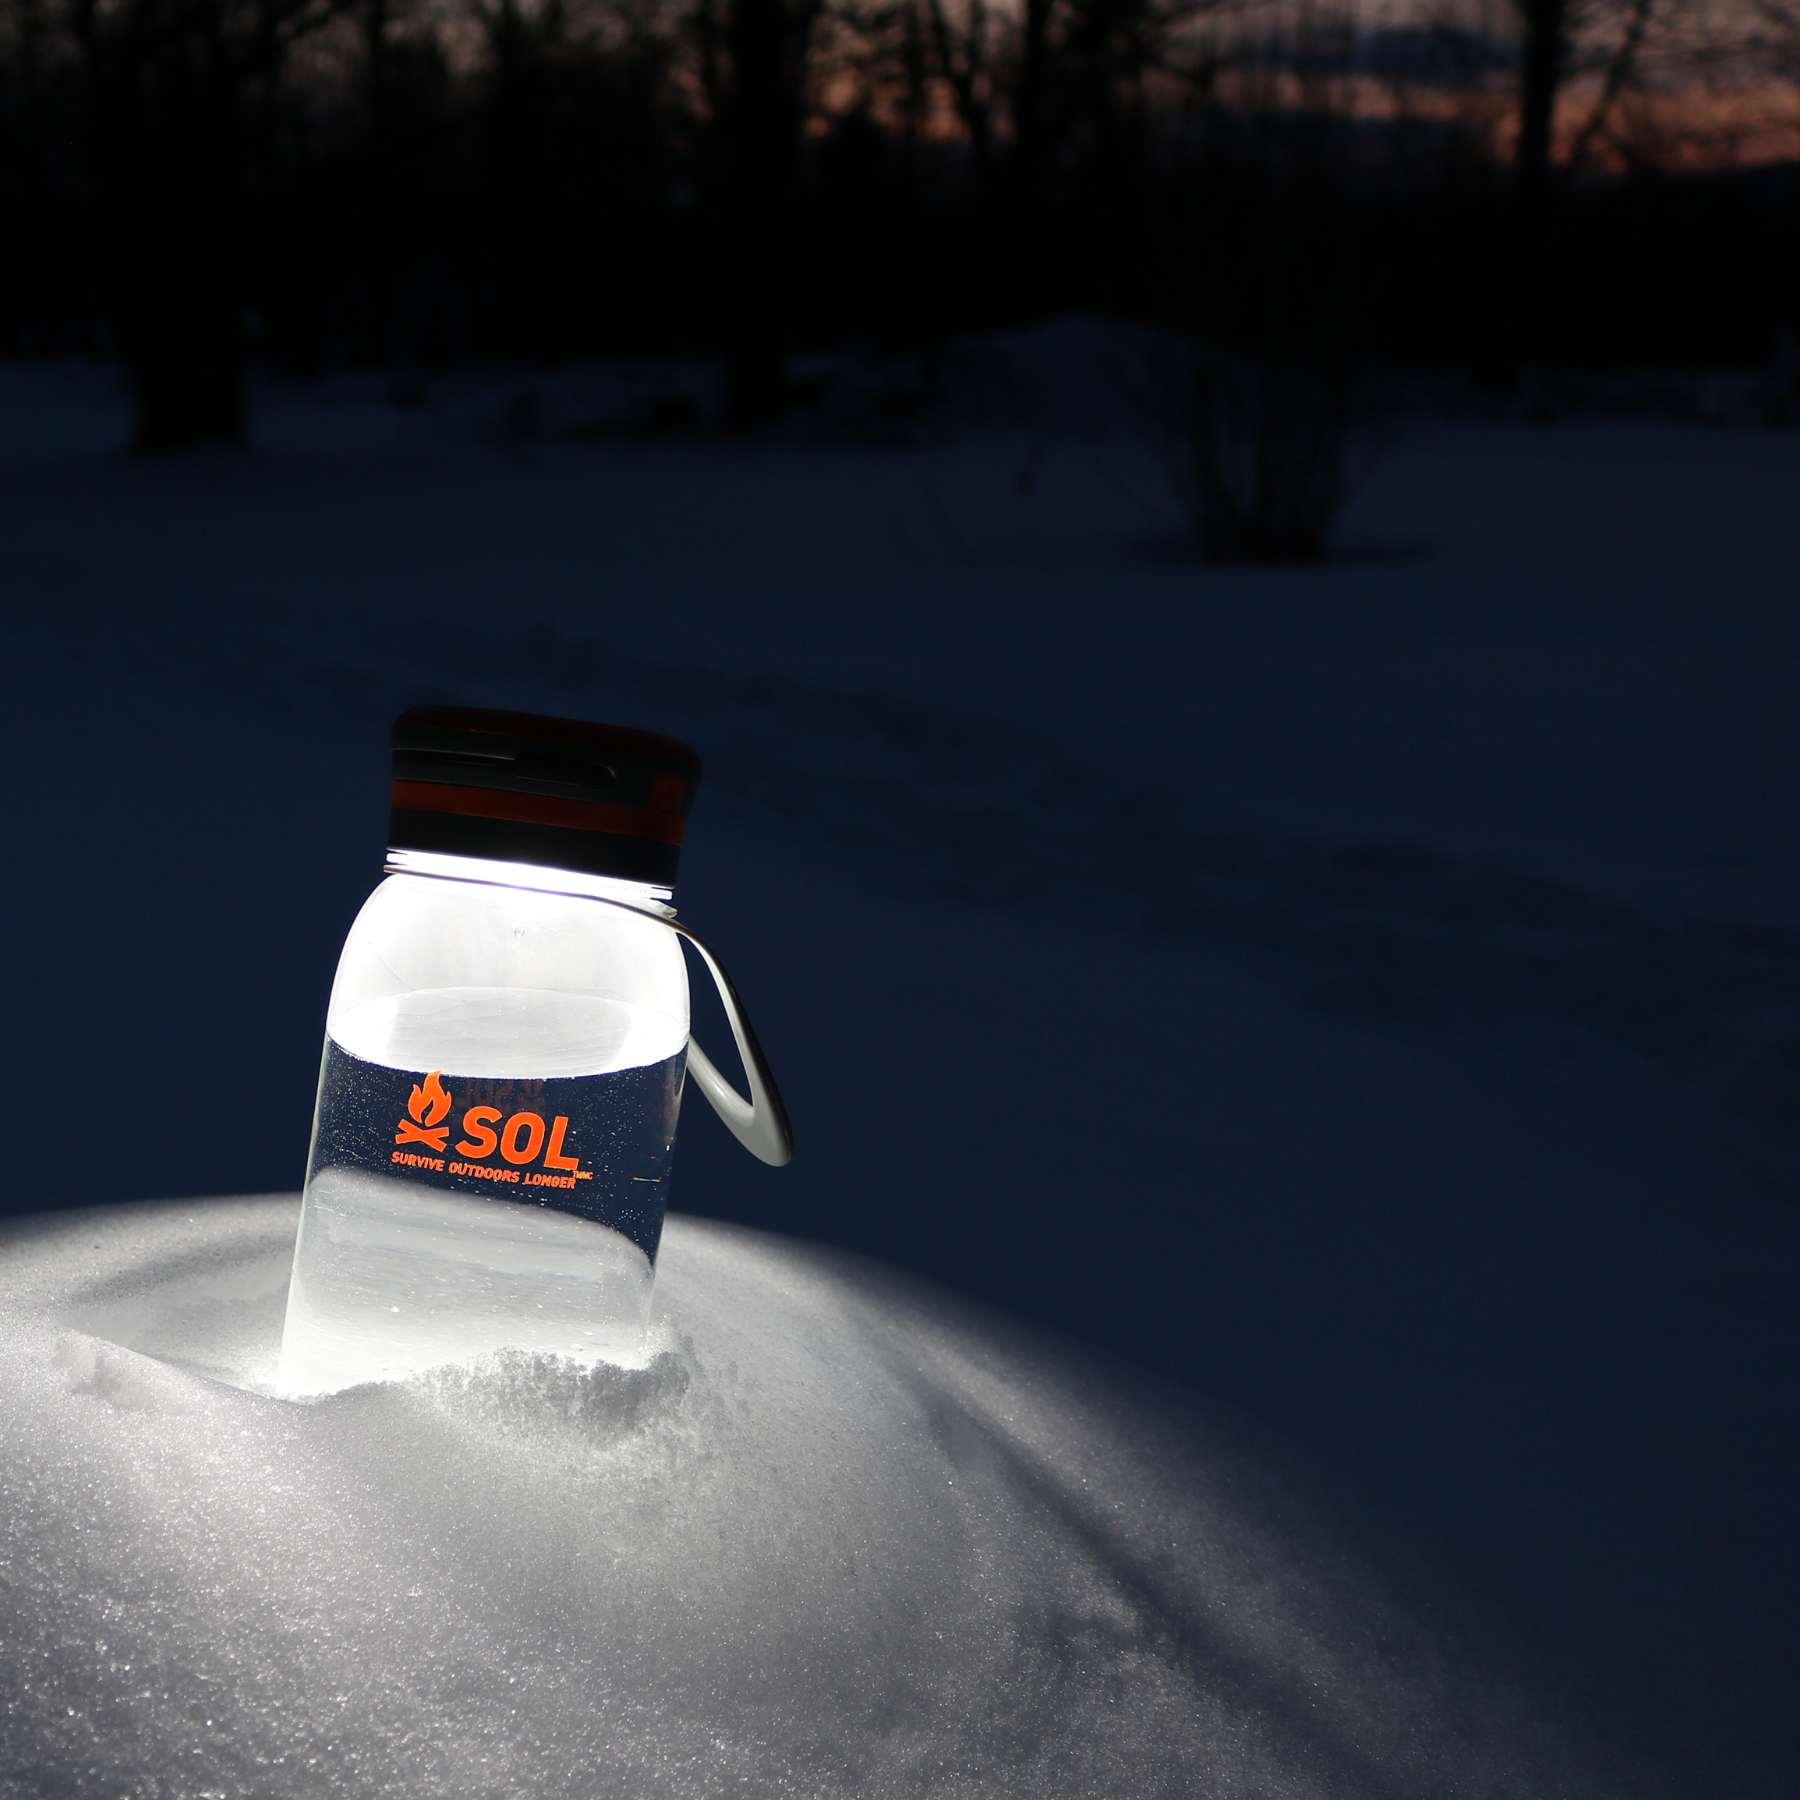 SOL Solar Water Bottle Lantern Lit Sitting in Snow in Darkness